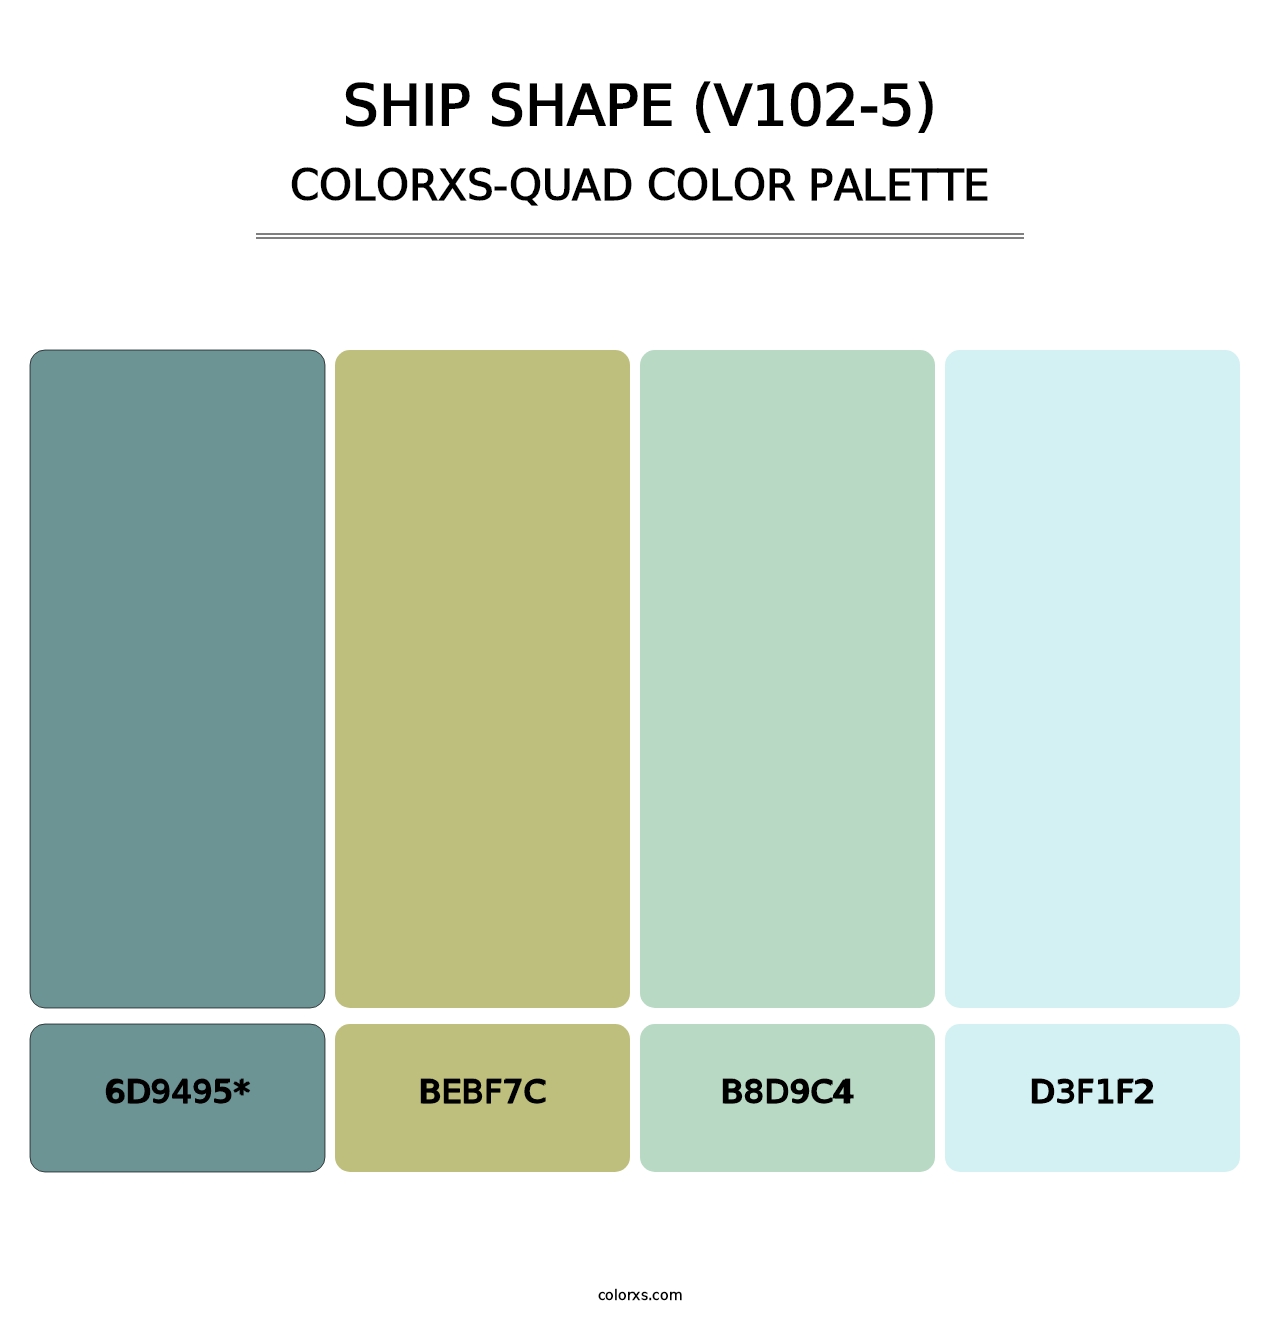 Ship Shape (V102-5) - Colorxs Quad Palette